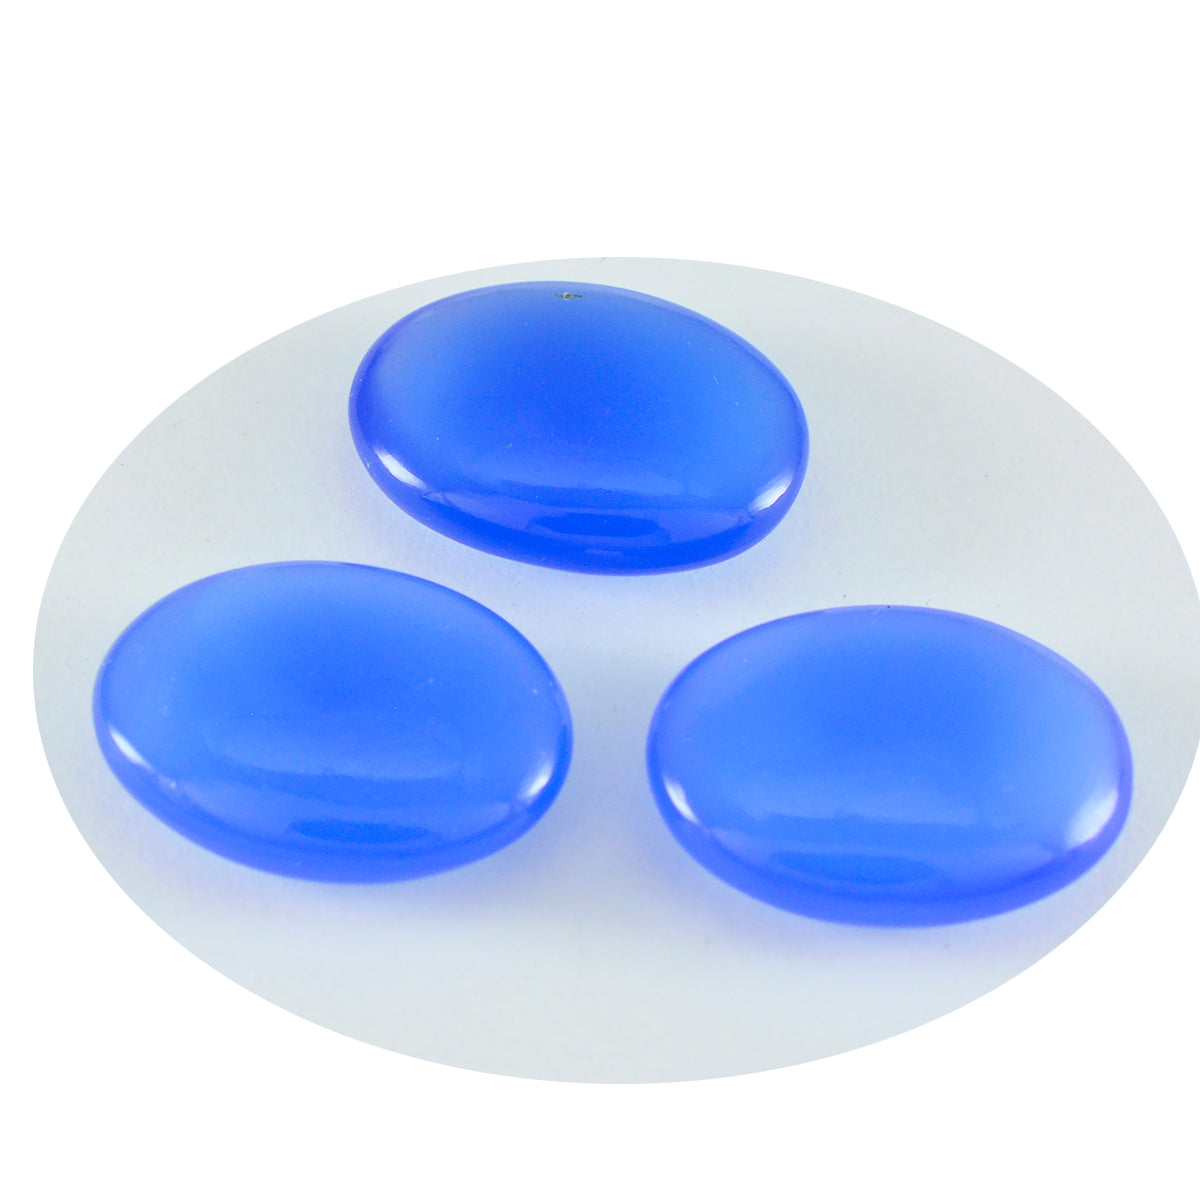 Riyogems 1PC blauwe chalcedoon cabochon 10x14 mm ovale vorm verbazingwekkende kwaliteit edelstenen